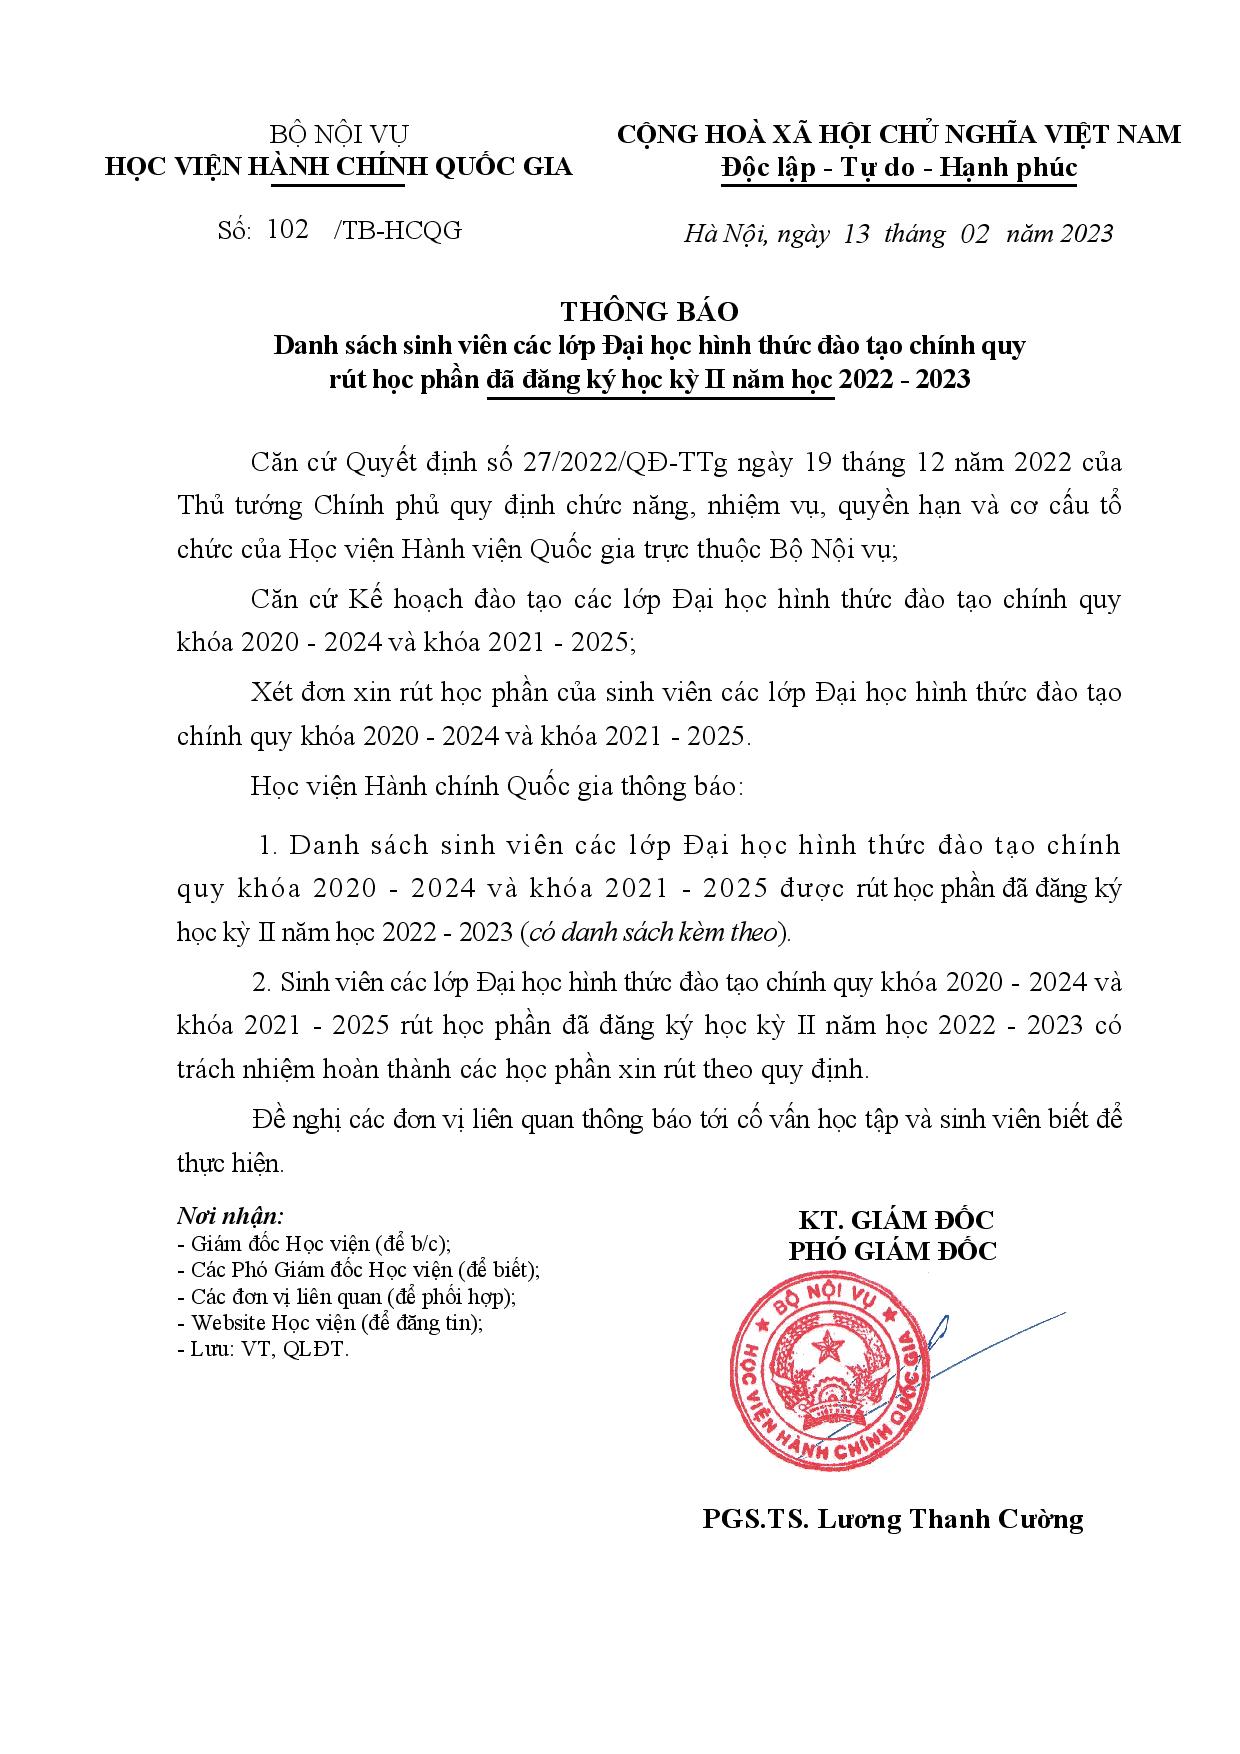 THONG BAO DANH SACH SINH VIEN RUT HOC PHAN HOC KY II  NAM HOC 2022-2023-page-001